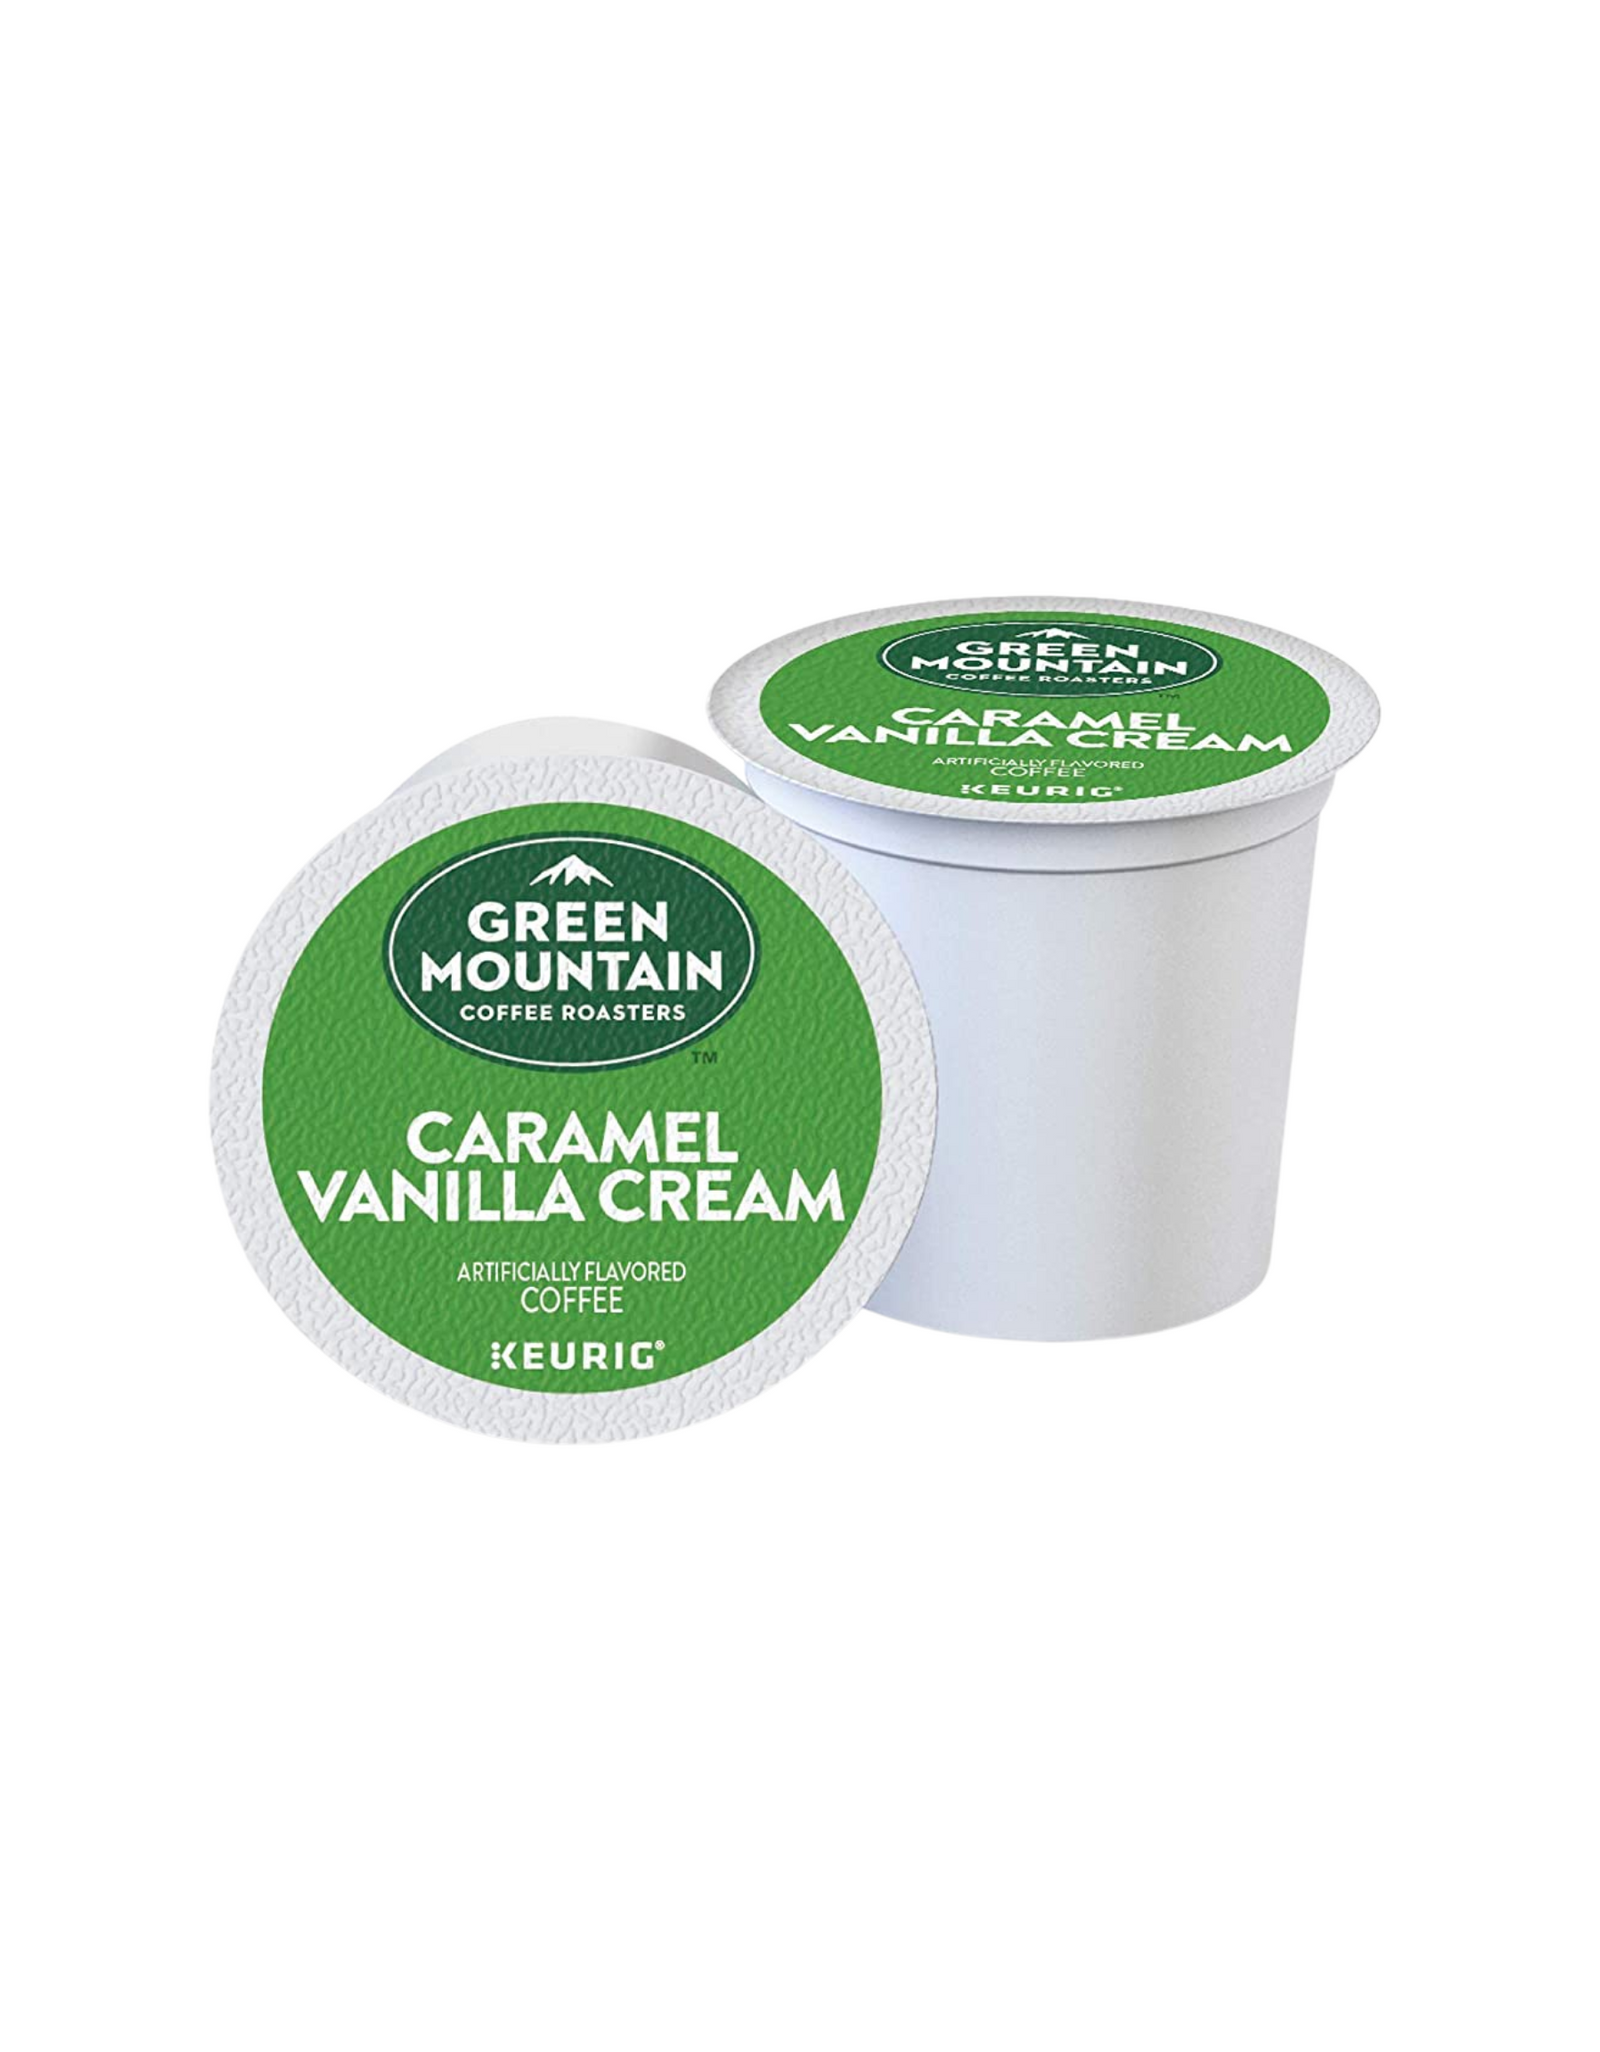 Green Mountain Coffee Roasters Caramel Vanilla Cream, Keurig K-Cup, Light Roast Coffee, 12 Ct (Pack of 6)